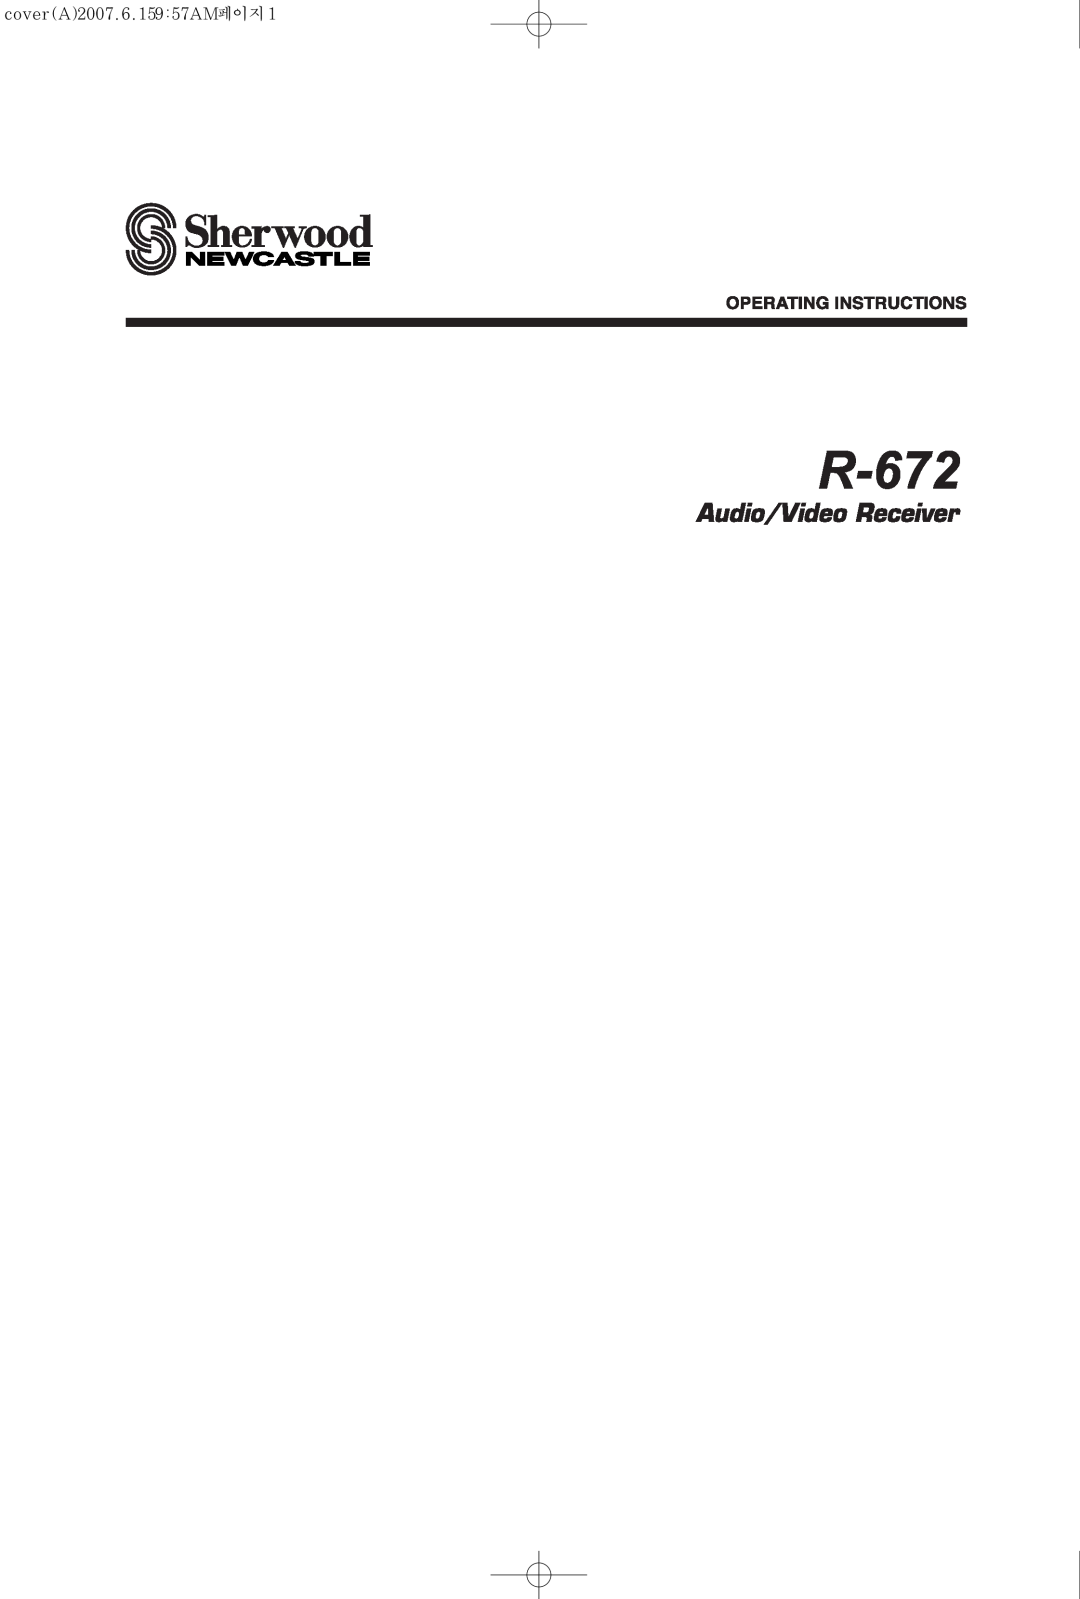 XM Satellite Radio R-672 manual coverA2007.6.159 57AM페이지 